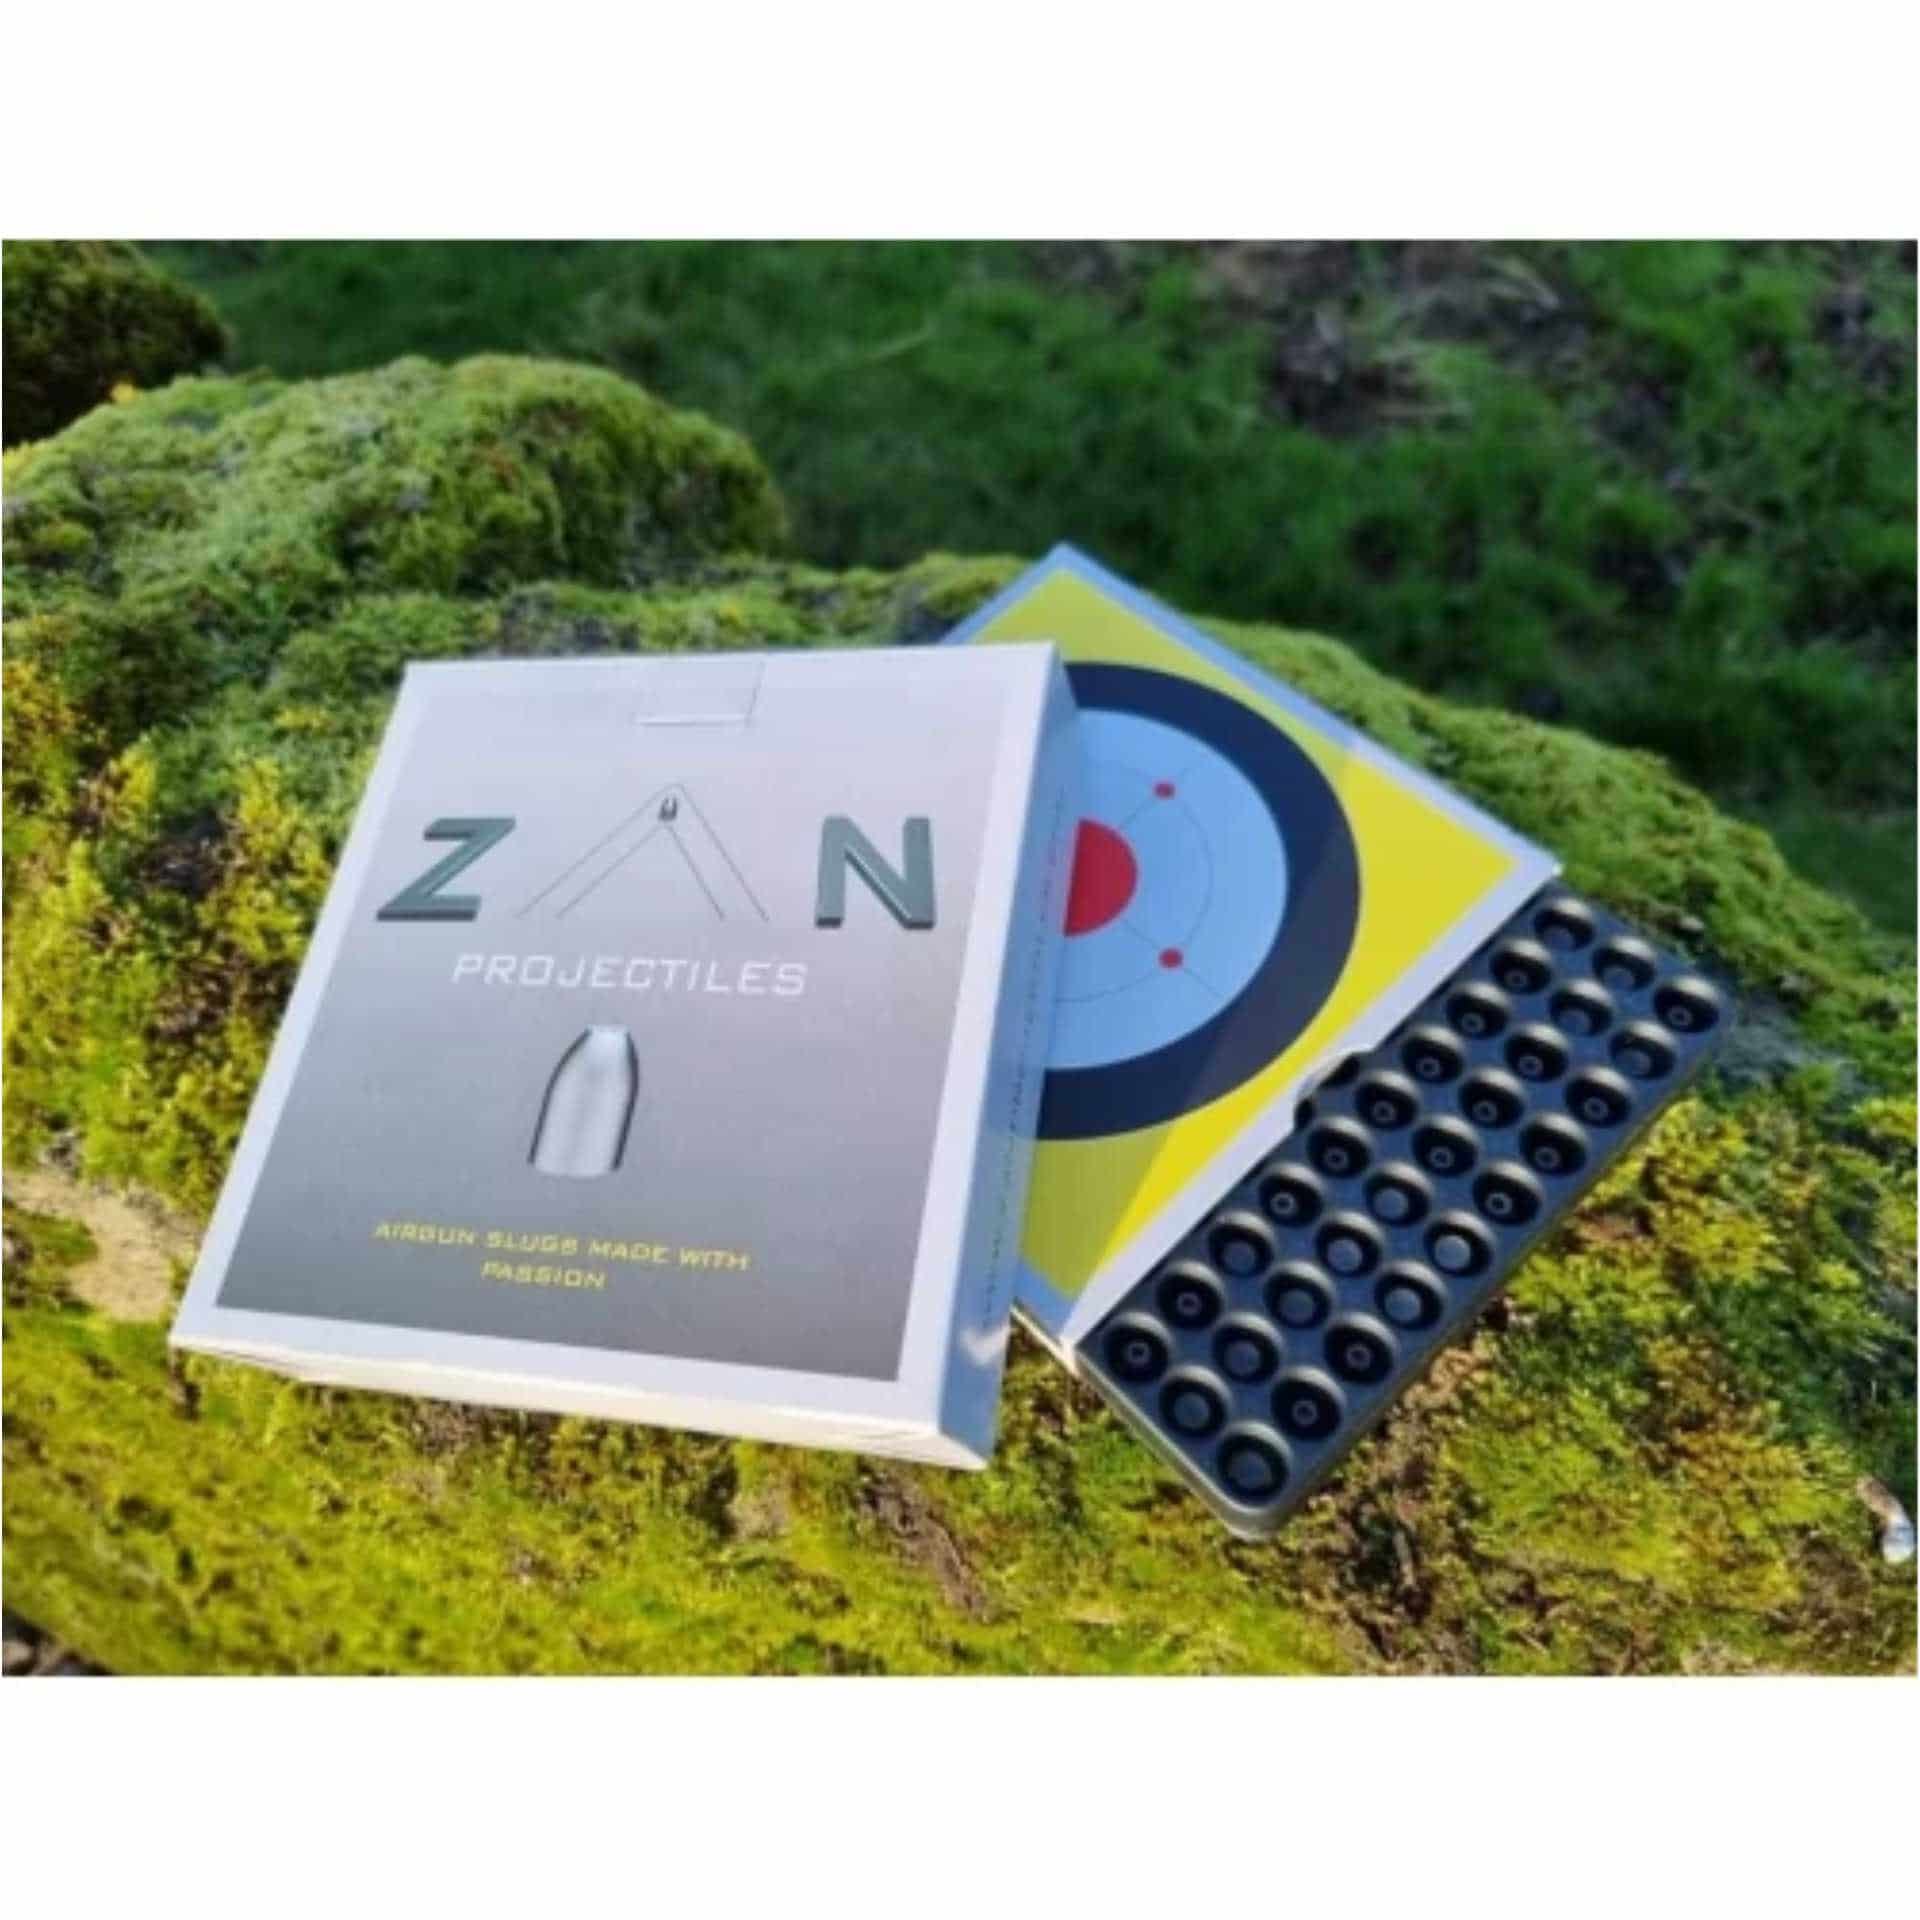 ZAN Slugs 5,5mm (.217), 1,65g (25.5 grain), 200pcs